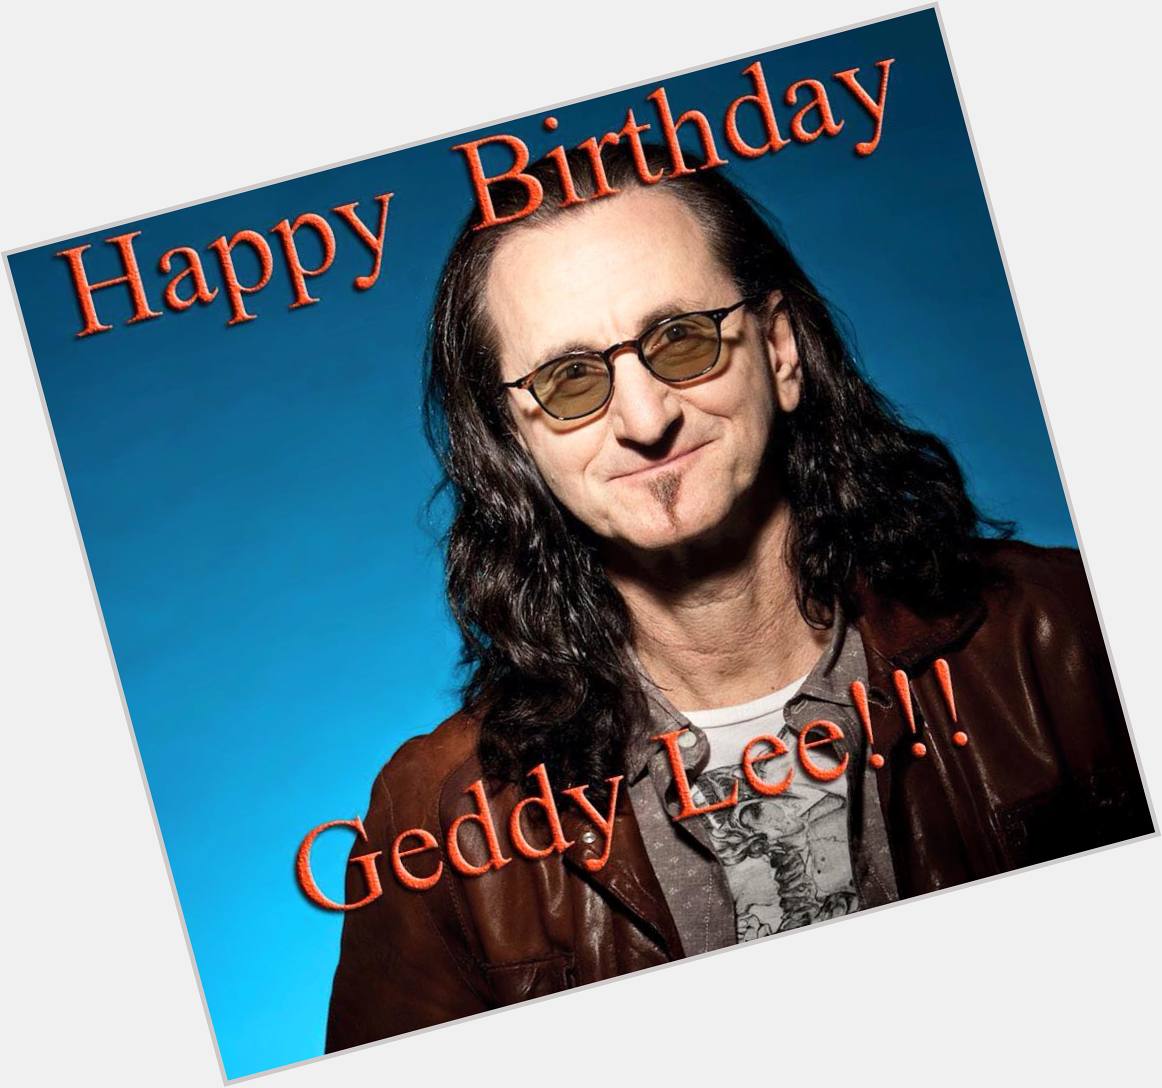 Happy Birthday to that musical monster himself Mr. Geddy Lee 